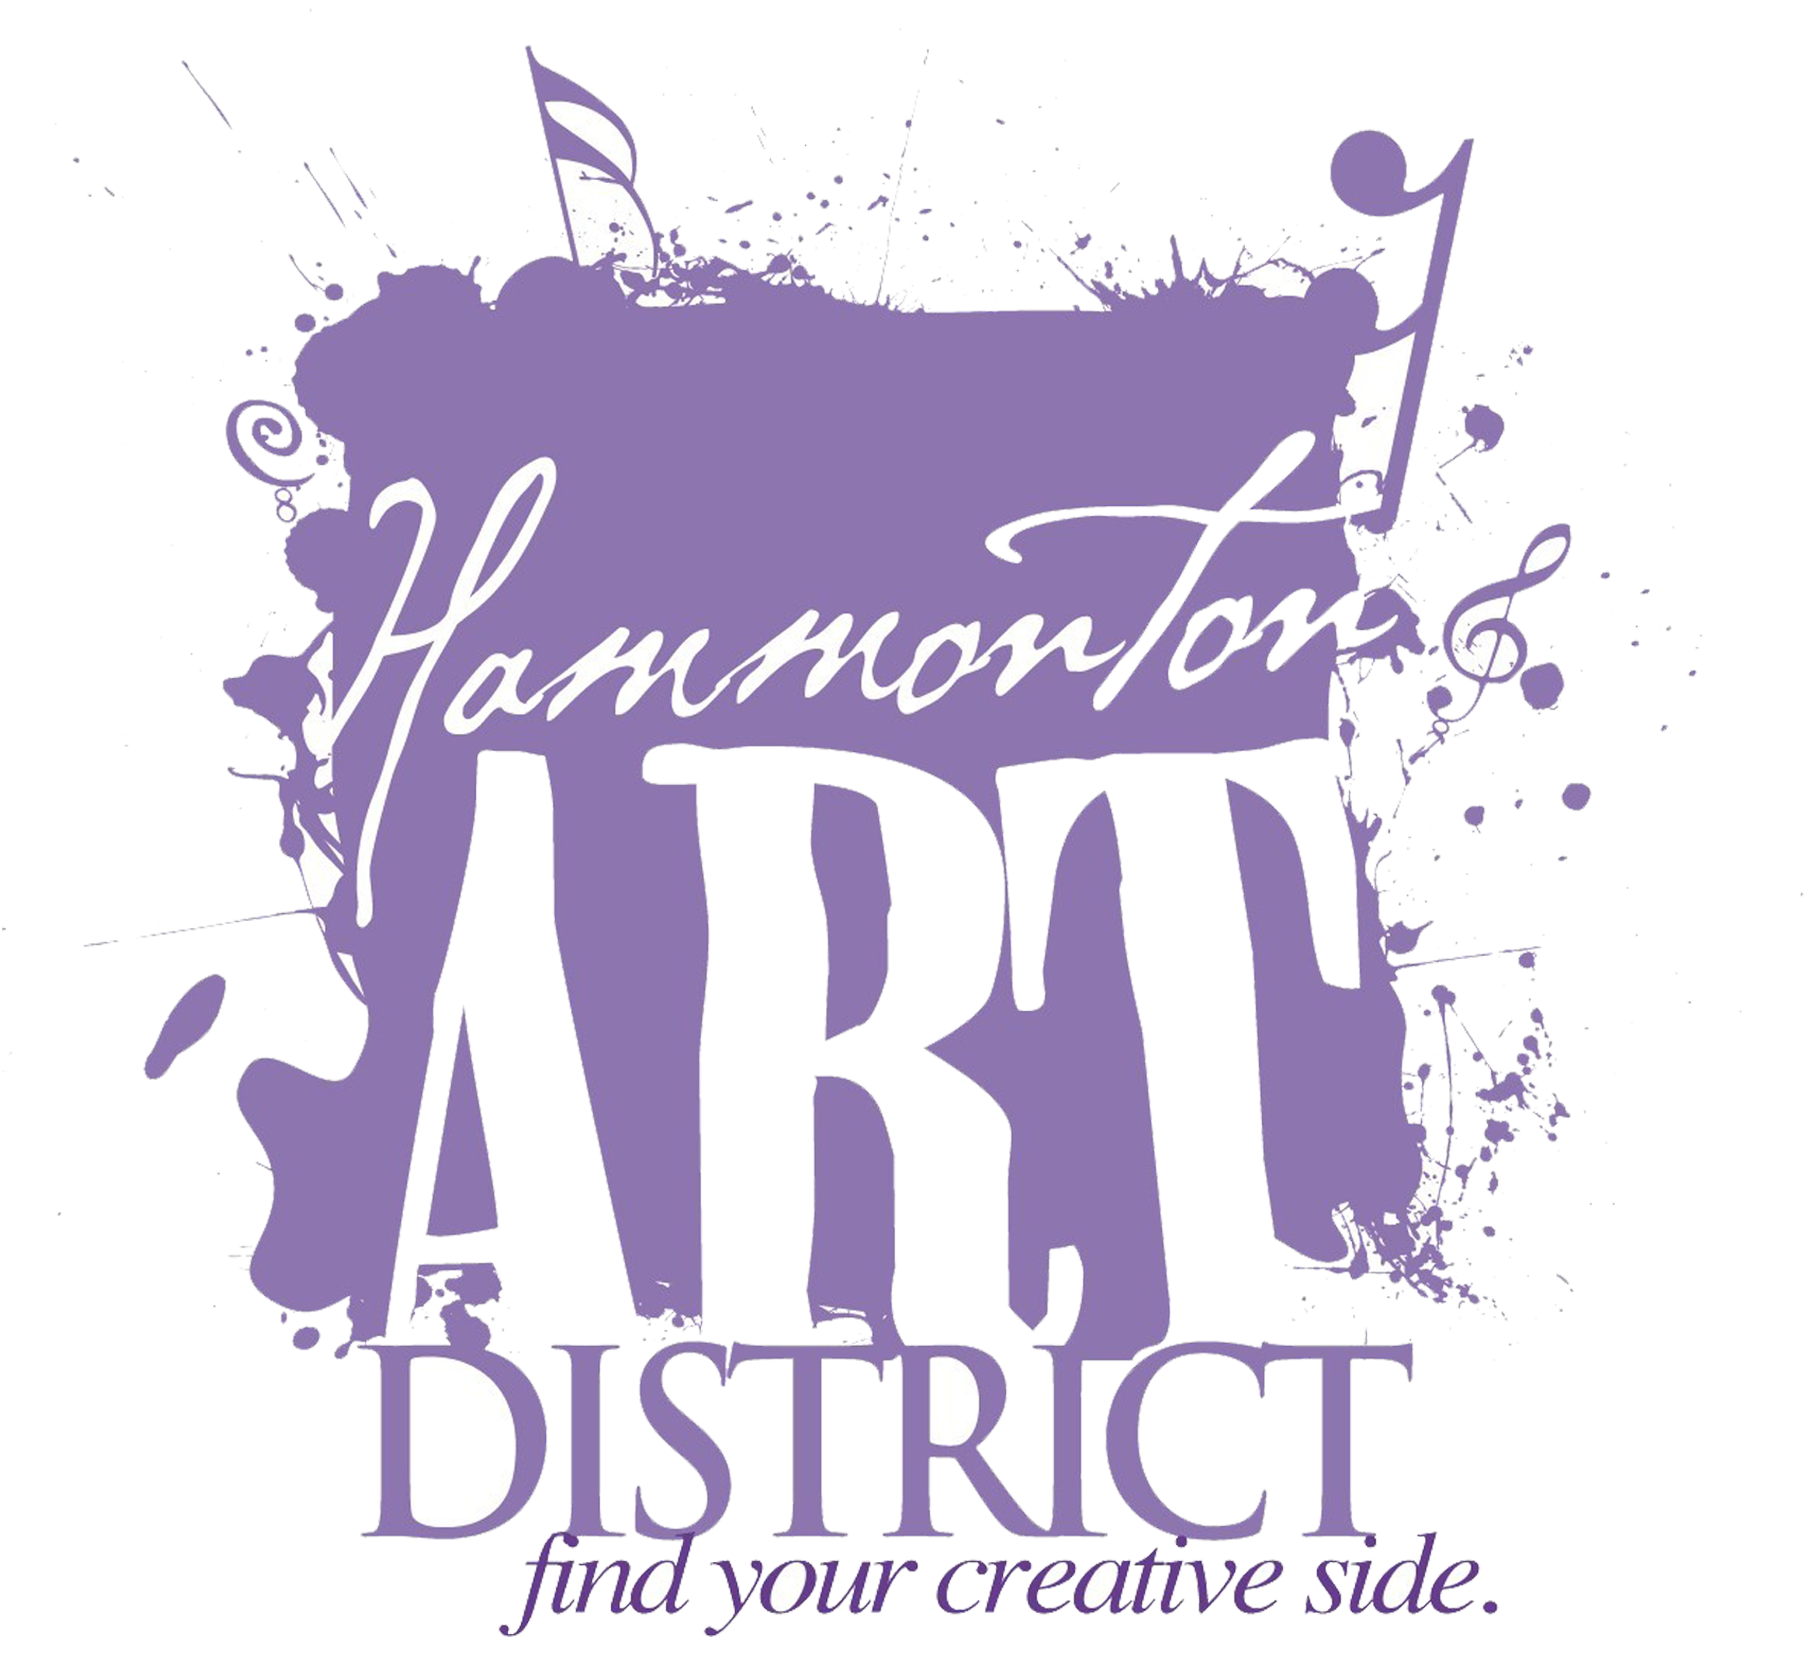 Hammonton_Art District logo.png